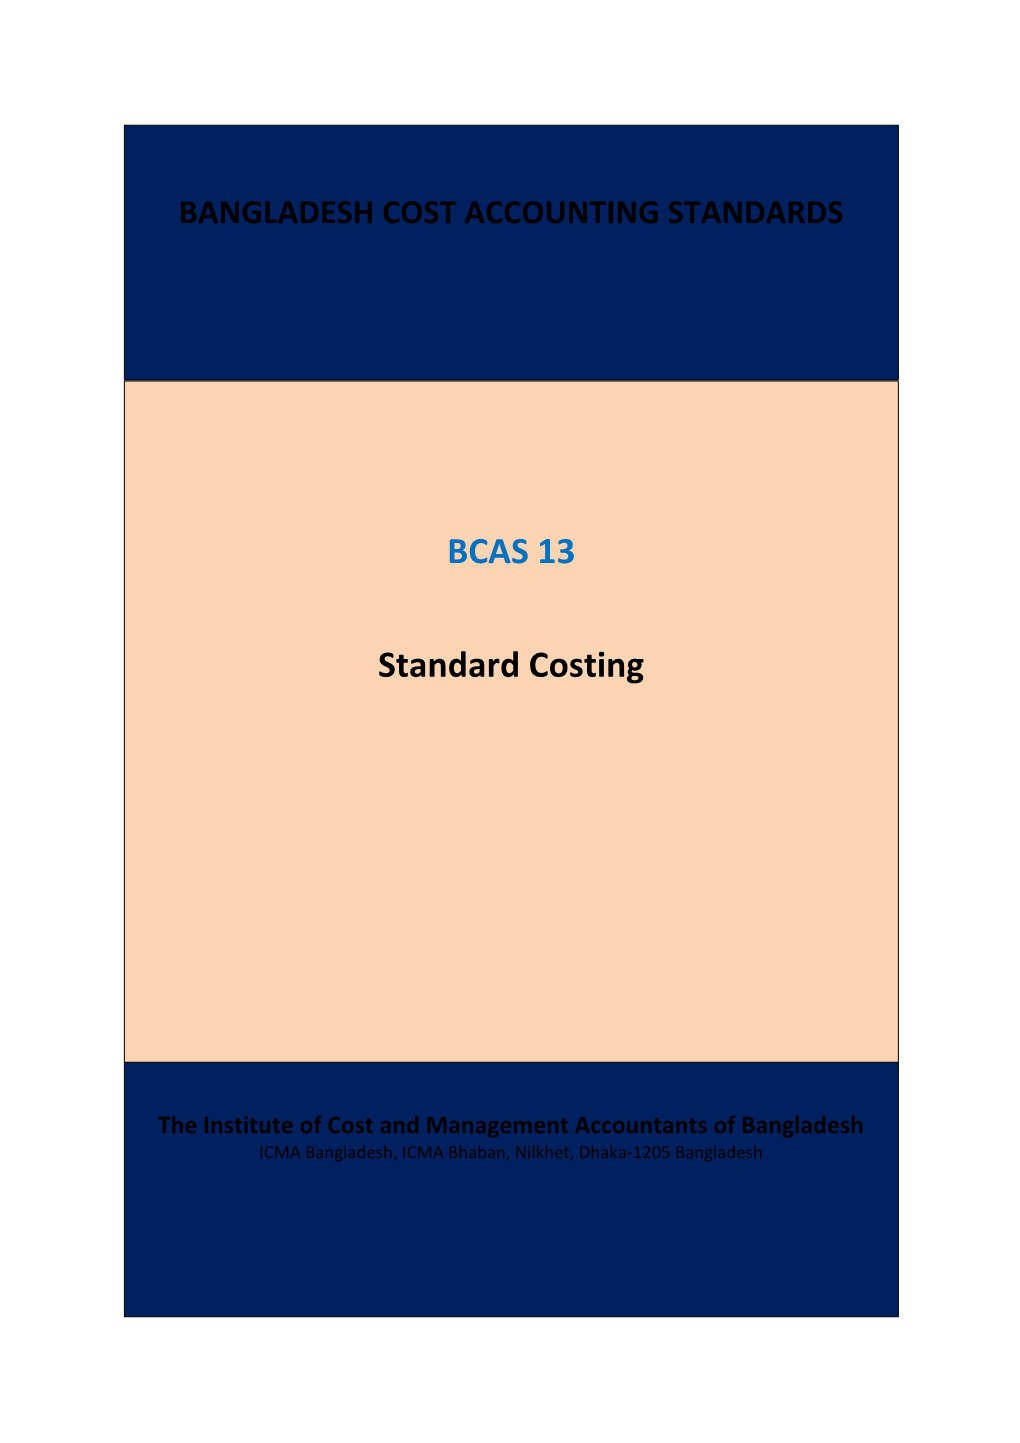 BCAS 13: Standard Costing